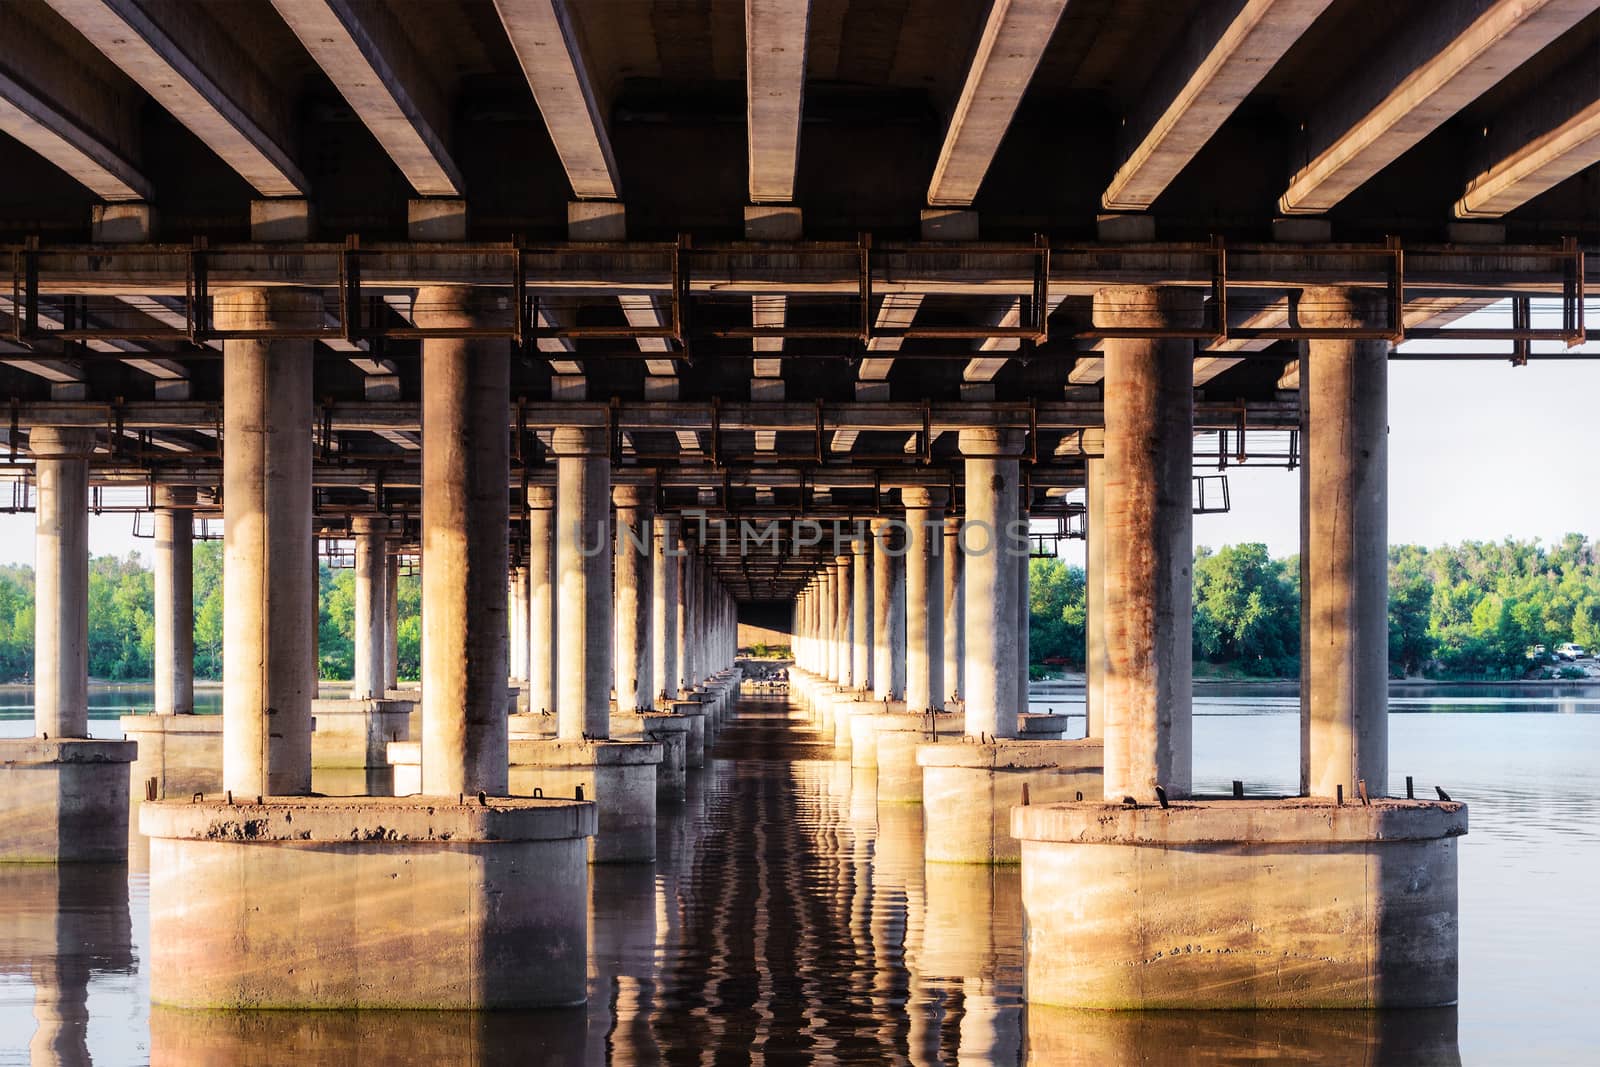 Under a bridge over a wide river